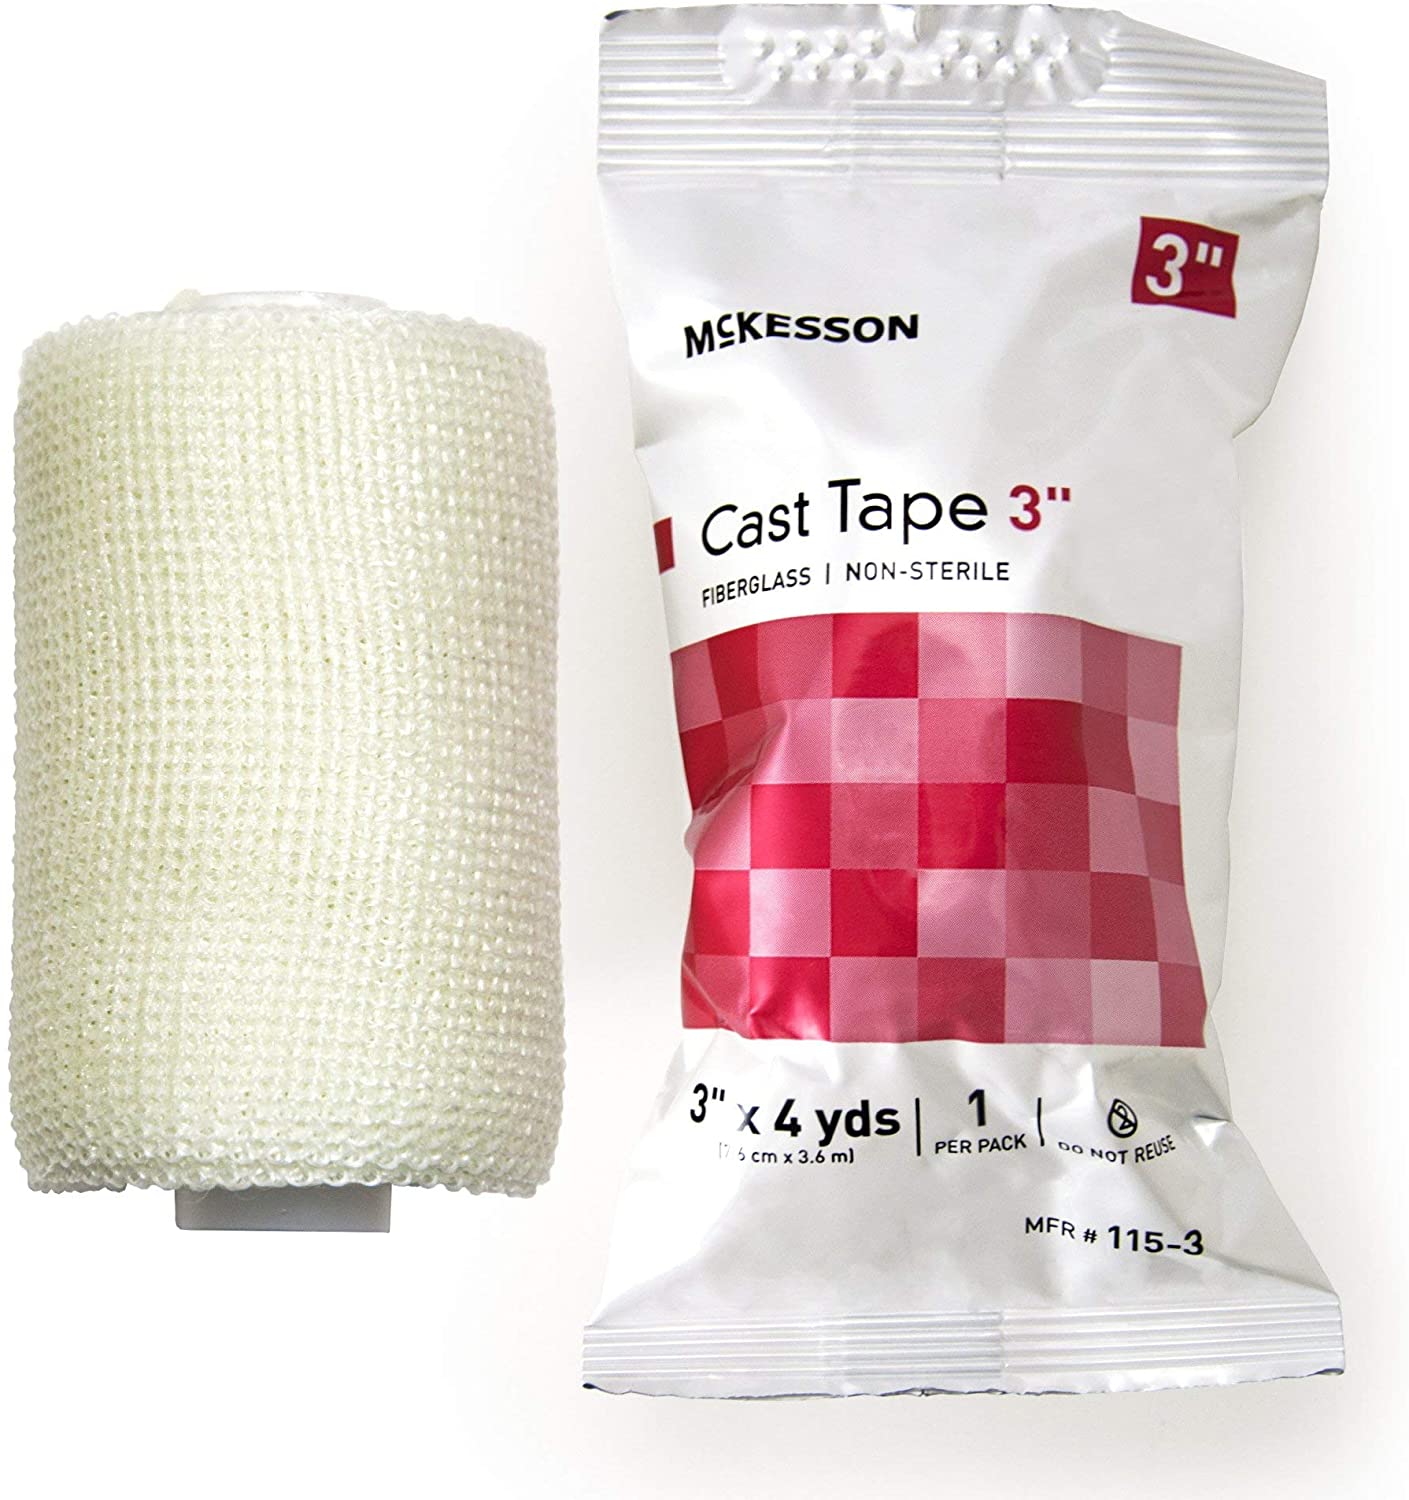 McKesson Fiberglass Casting tape 3 inch X 4 yards |1 ROLL|